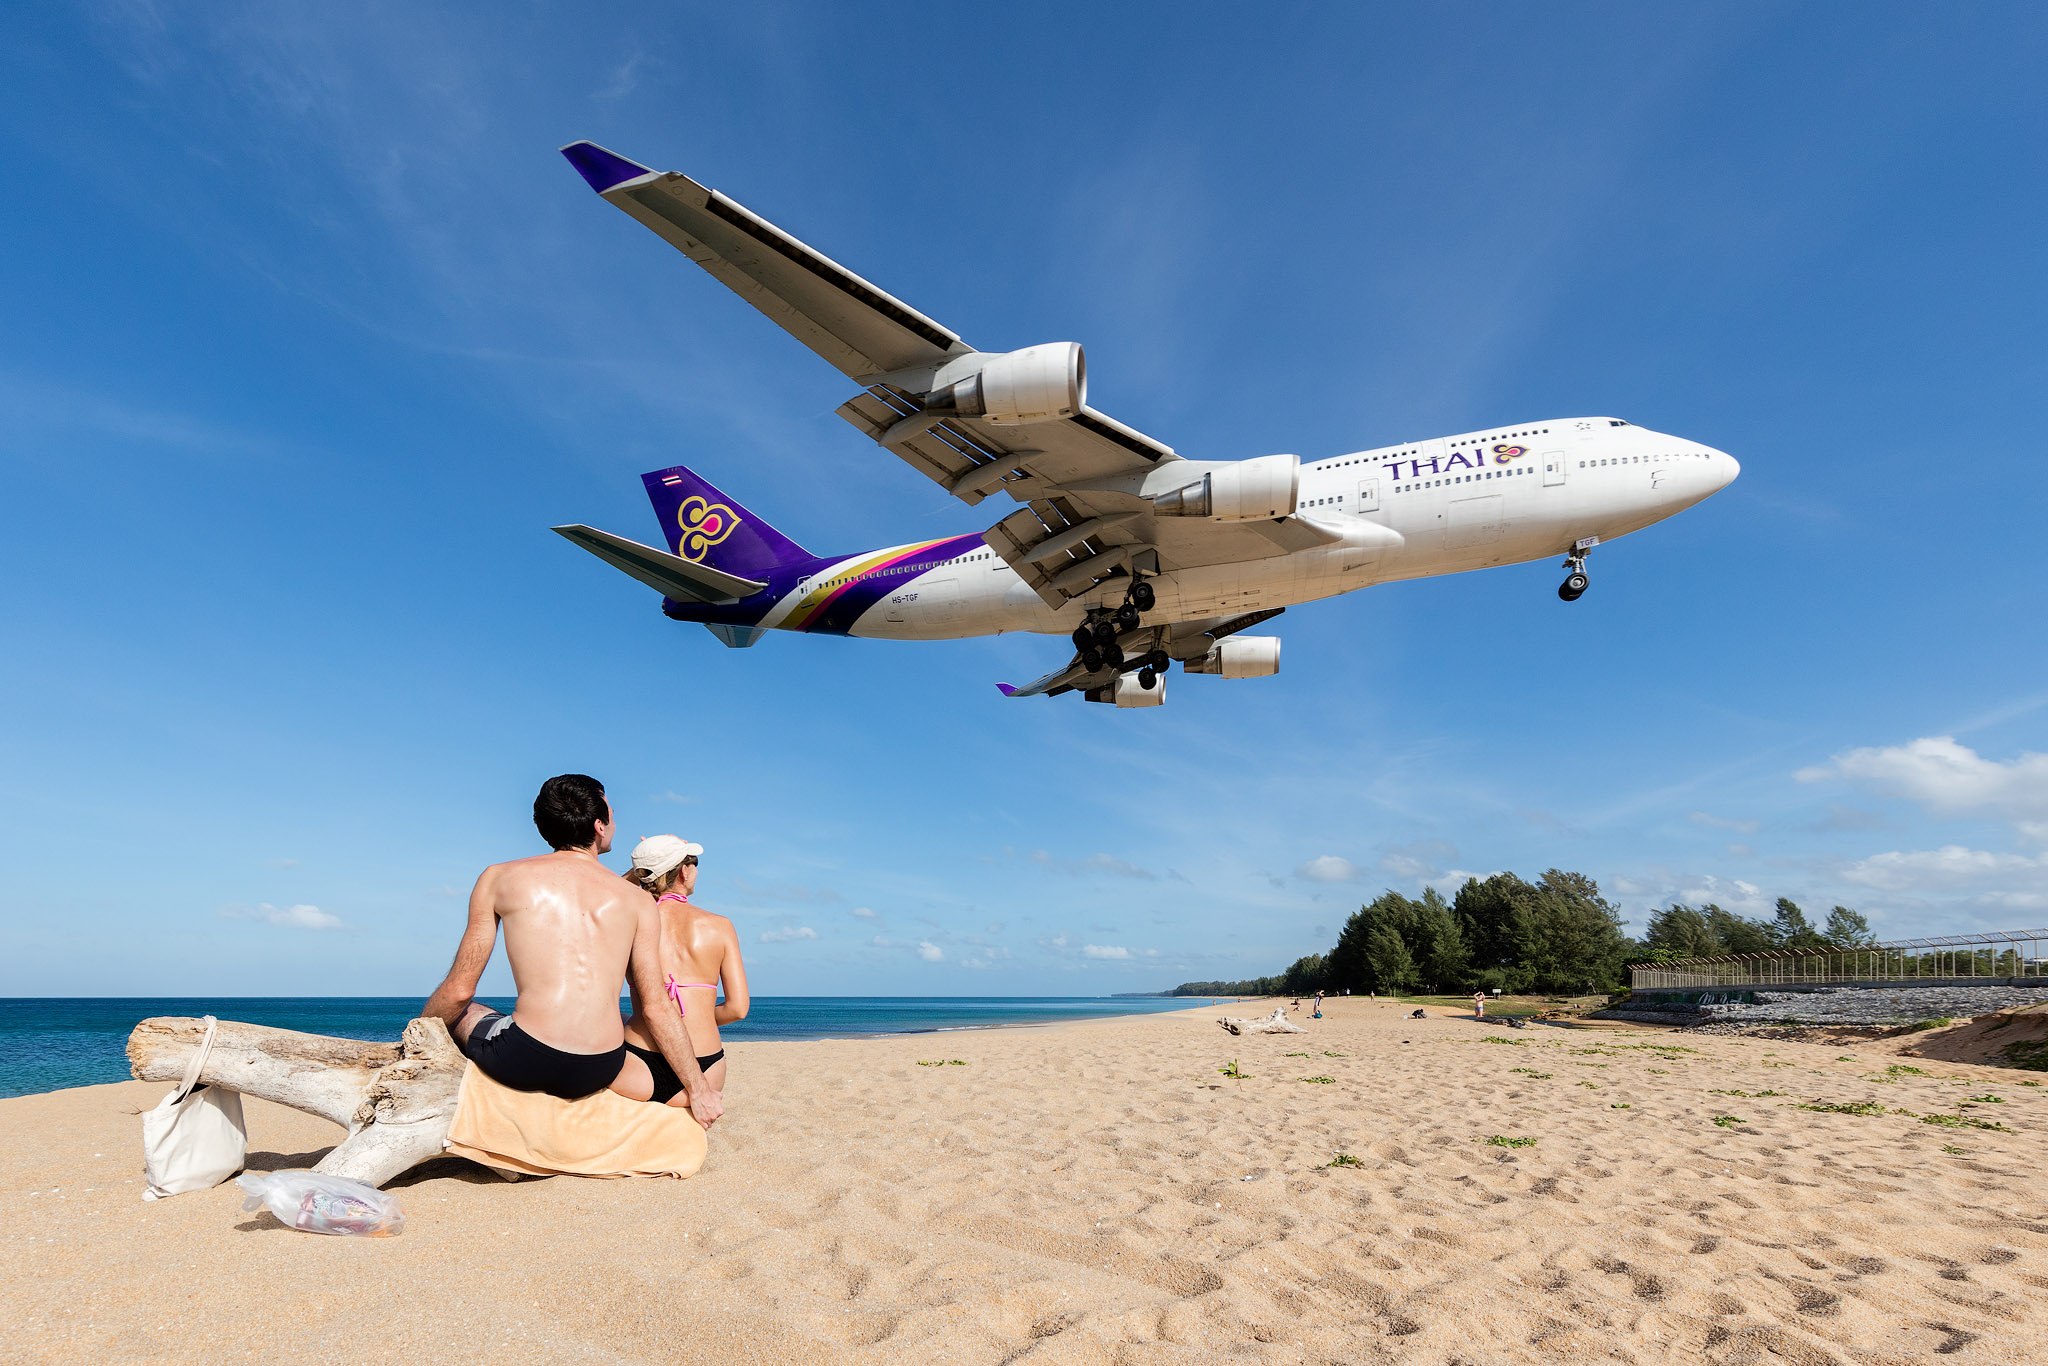 Таиланд самолет. Май као Пхукет. Пляж май као. Пляж май као Пхукет аэропорт. Тайланд самолет.